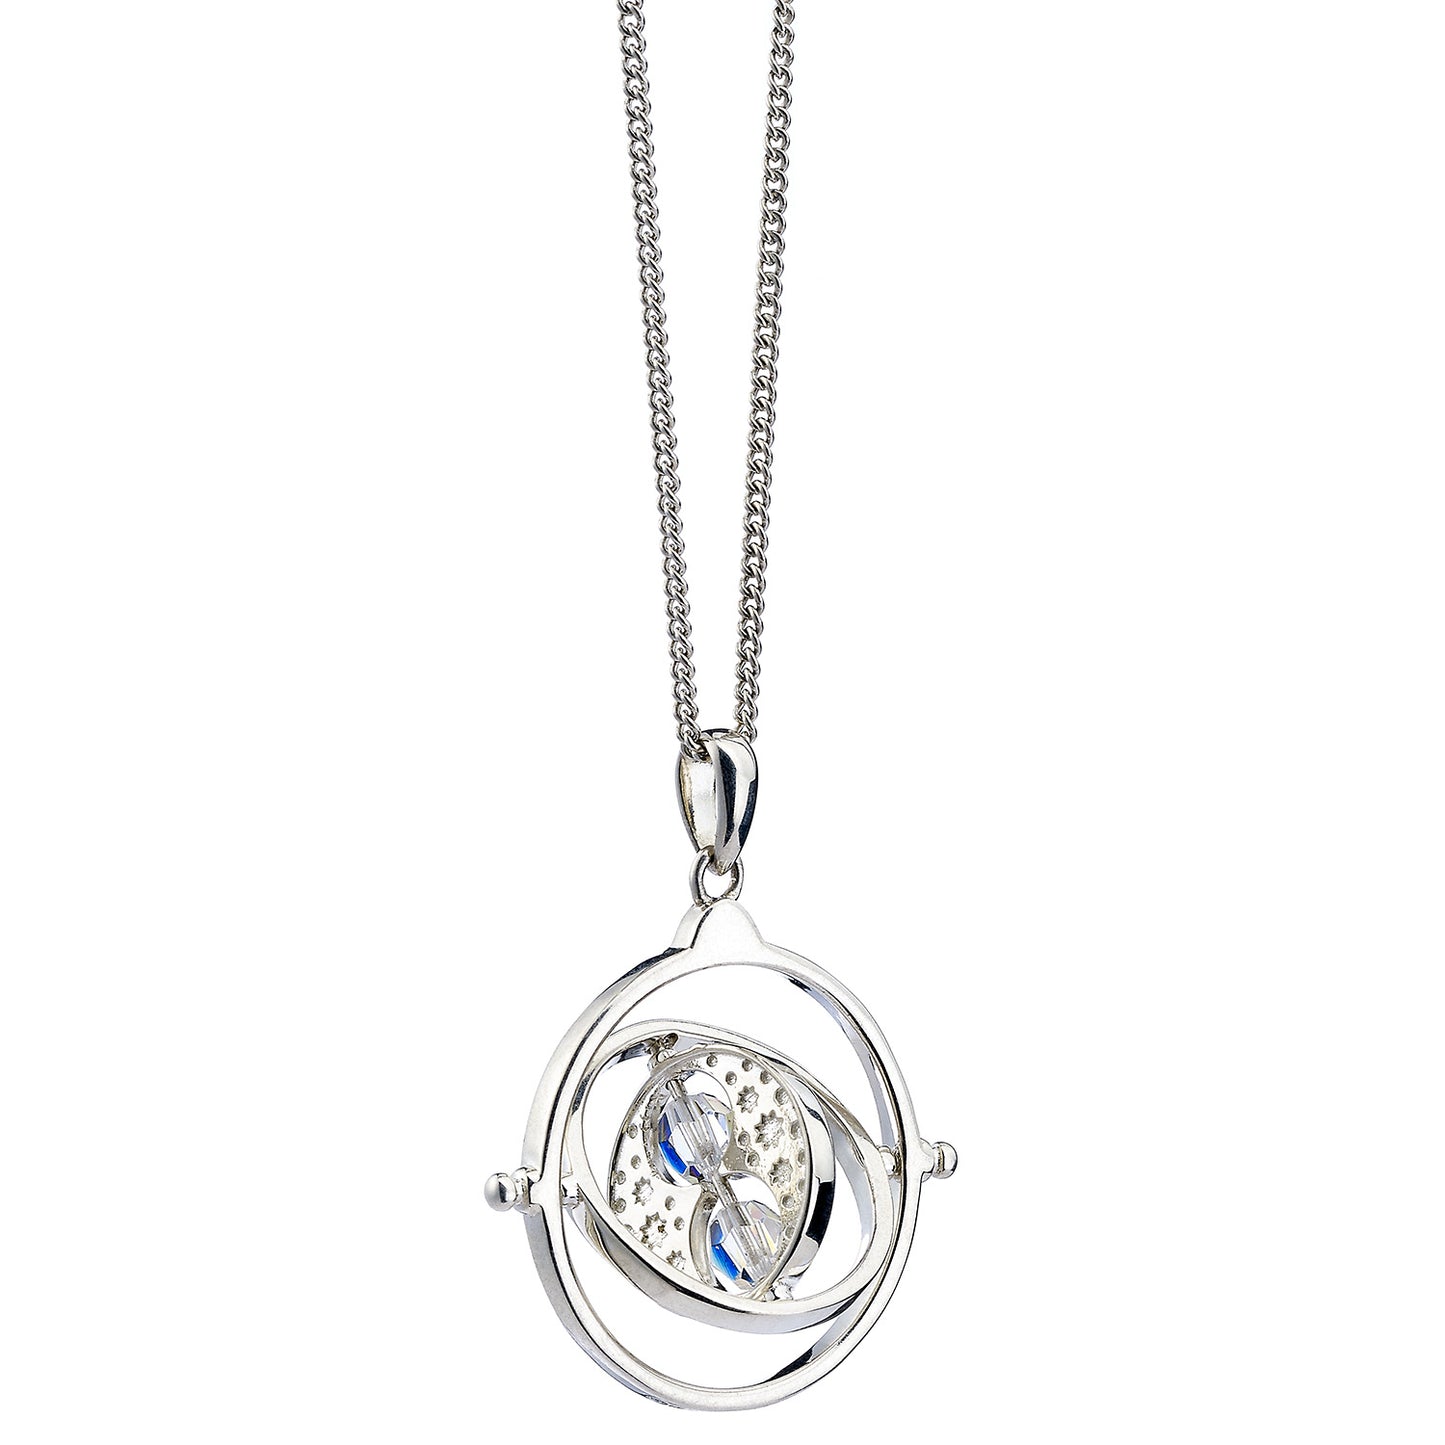 Harry Potter Time Turner Necklace Embellished with Crystals - Sterling Silver